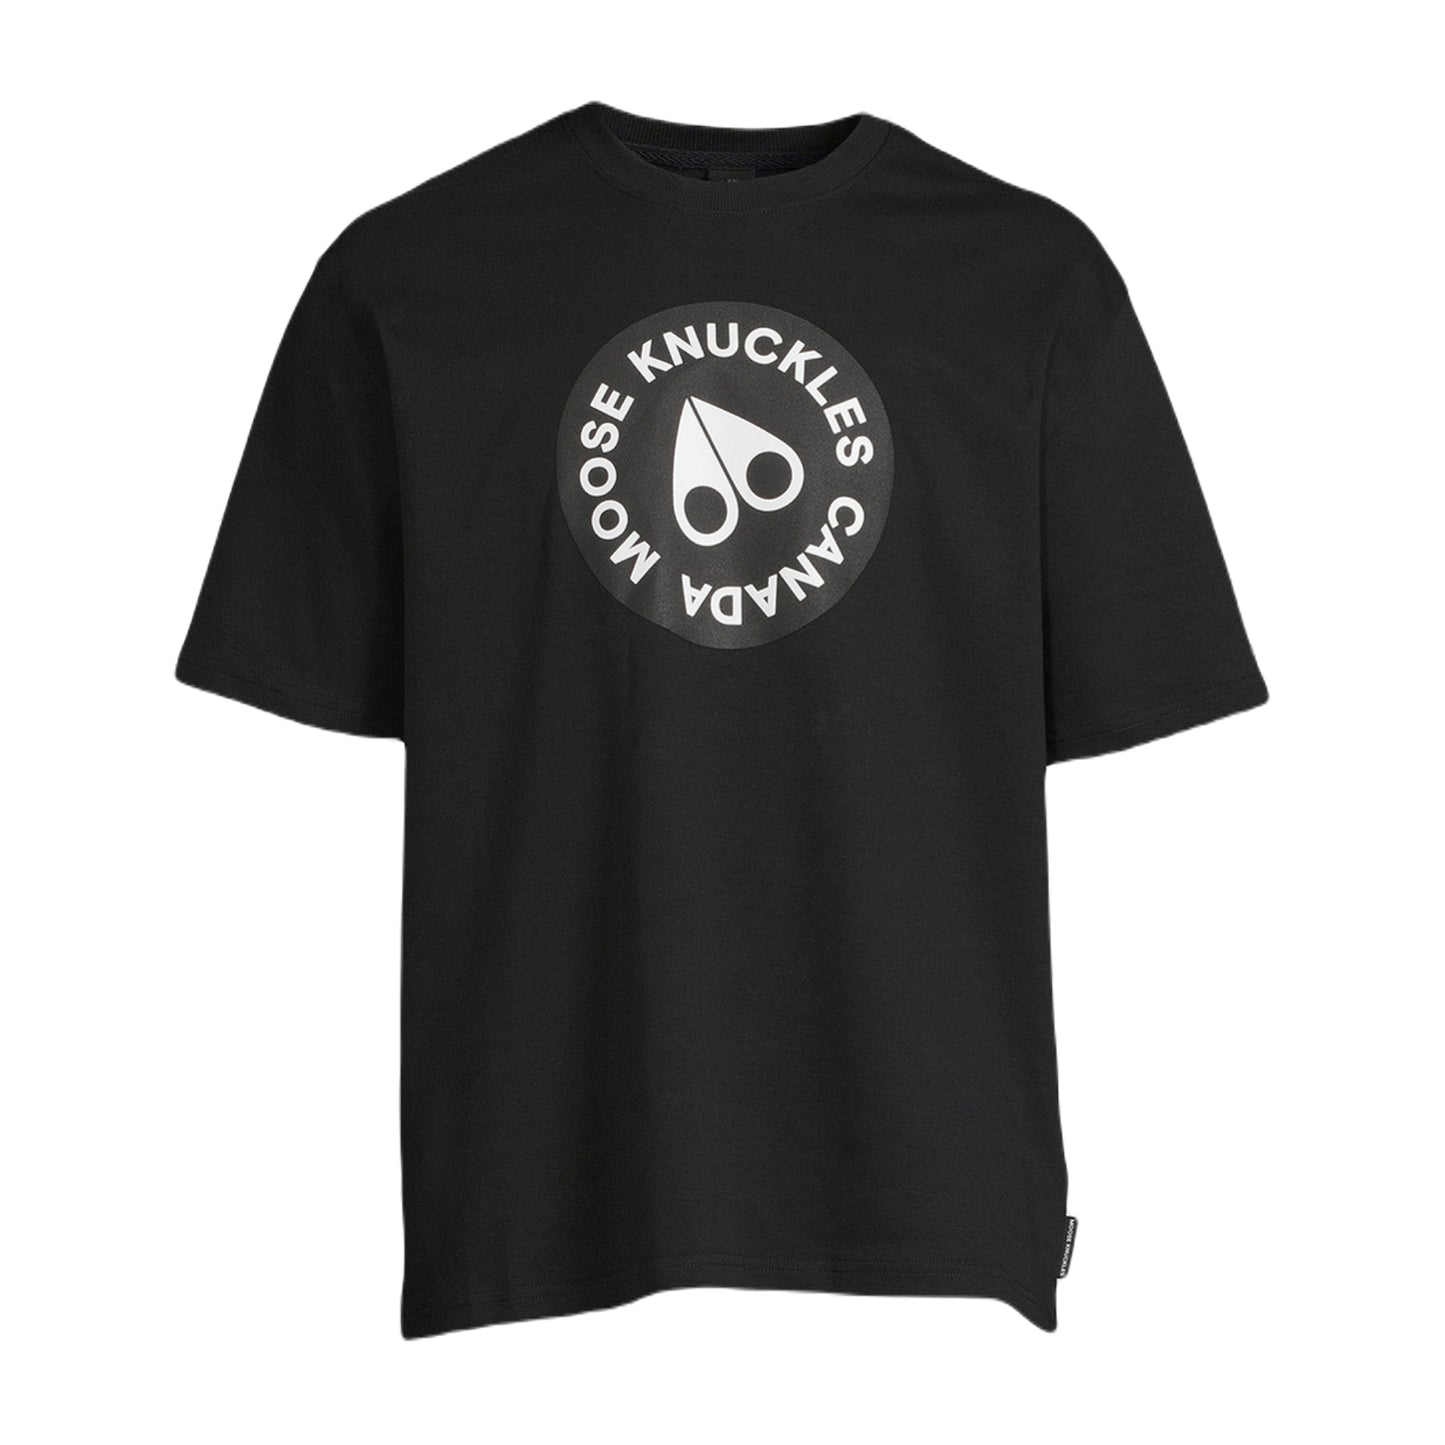 Moose Knuckles Payne T-Shirt - 292 Black - Escape Menswear